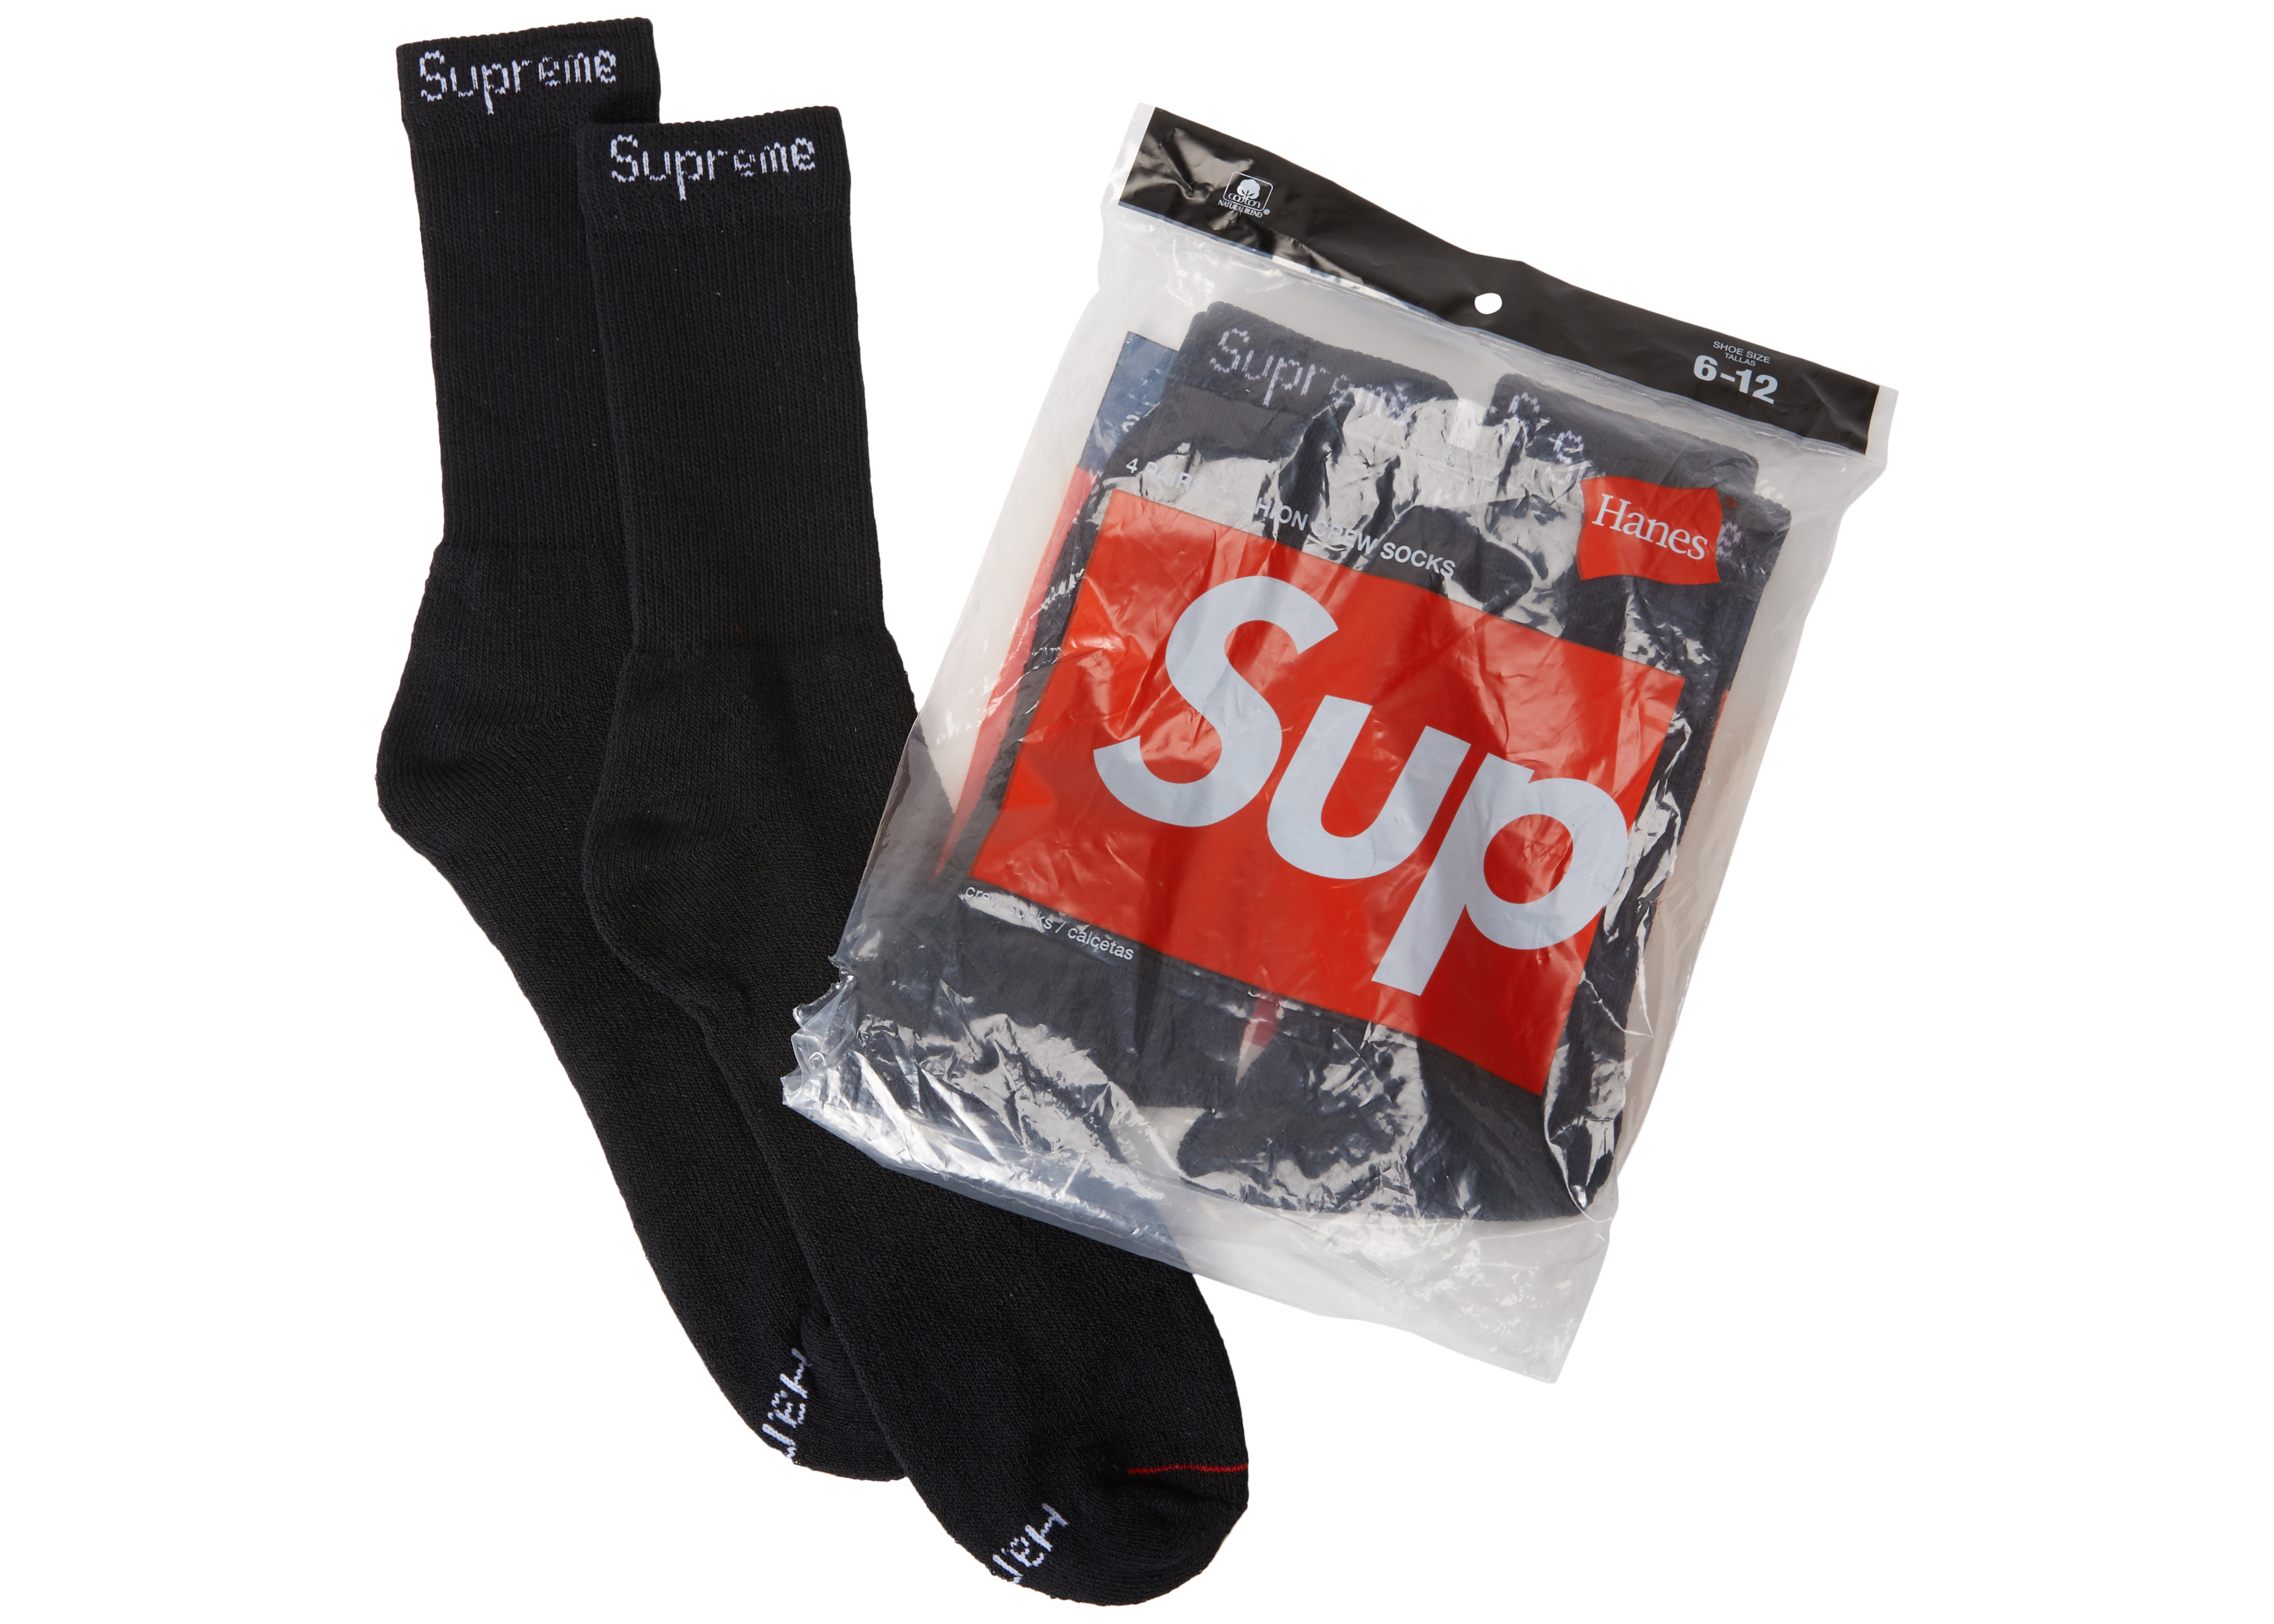 1 PACK Supreme x Hanes Crew Socks 